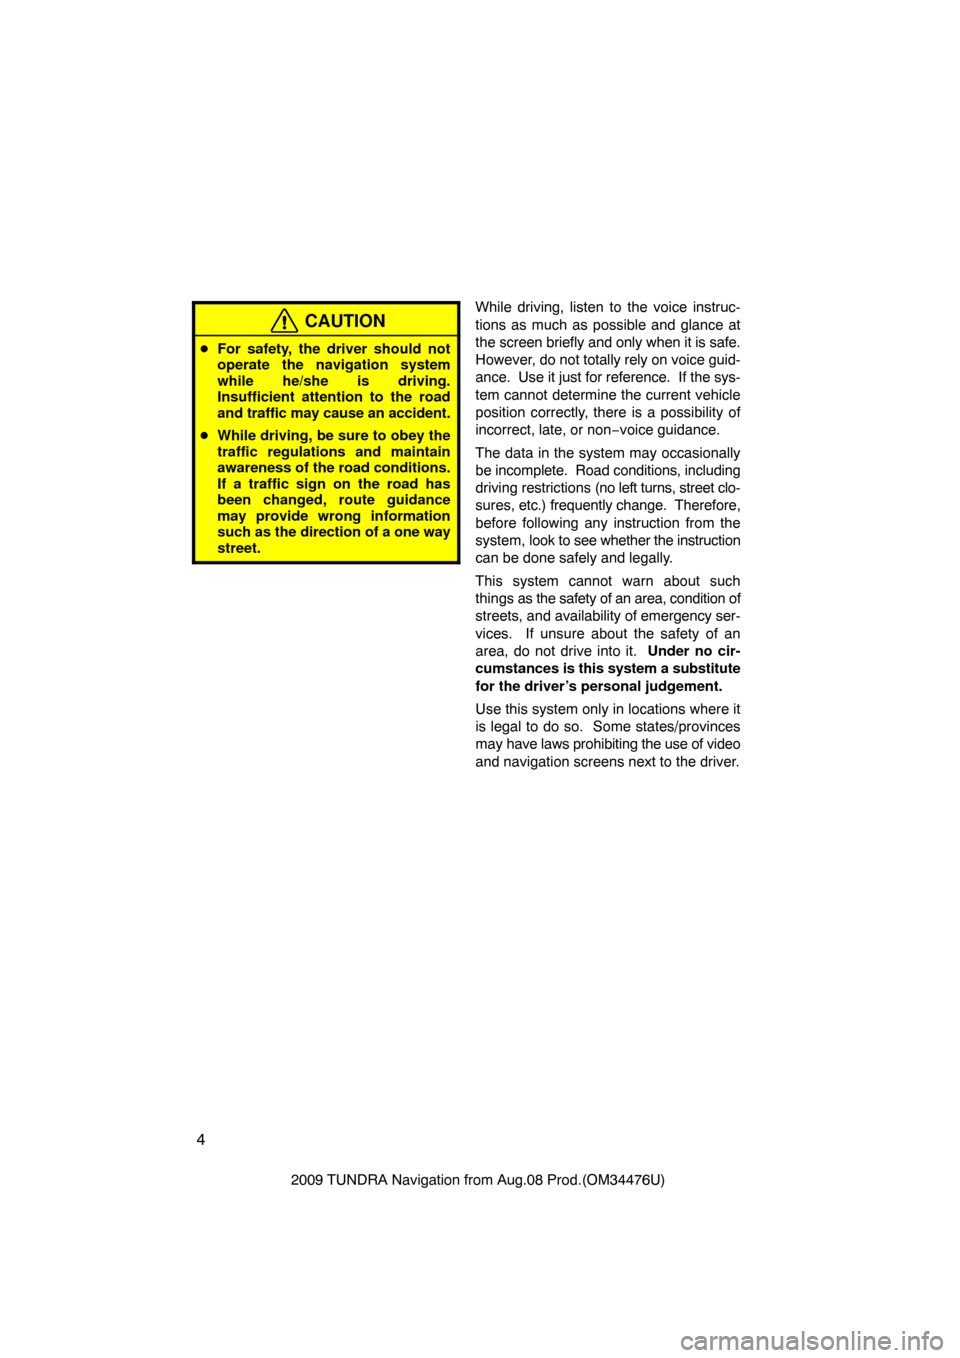 TOYOTA TUNDRA 2009 2.G Navigation Manual 4
2009 TUNDRA Navigation from Aug.08 Prod.(OM34476U)
CAUTION
For safety, the driver should not
operate the navigation system
while he/she is driving.
Insufficient attention to the road
and traffic ma